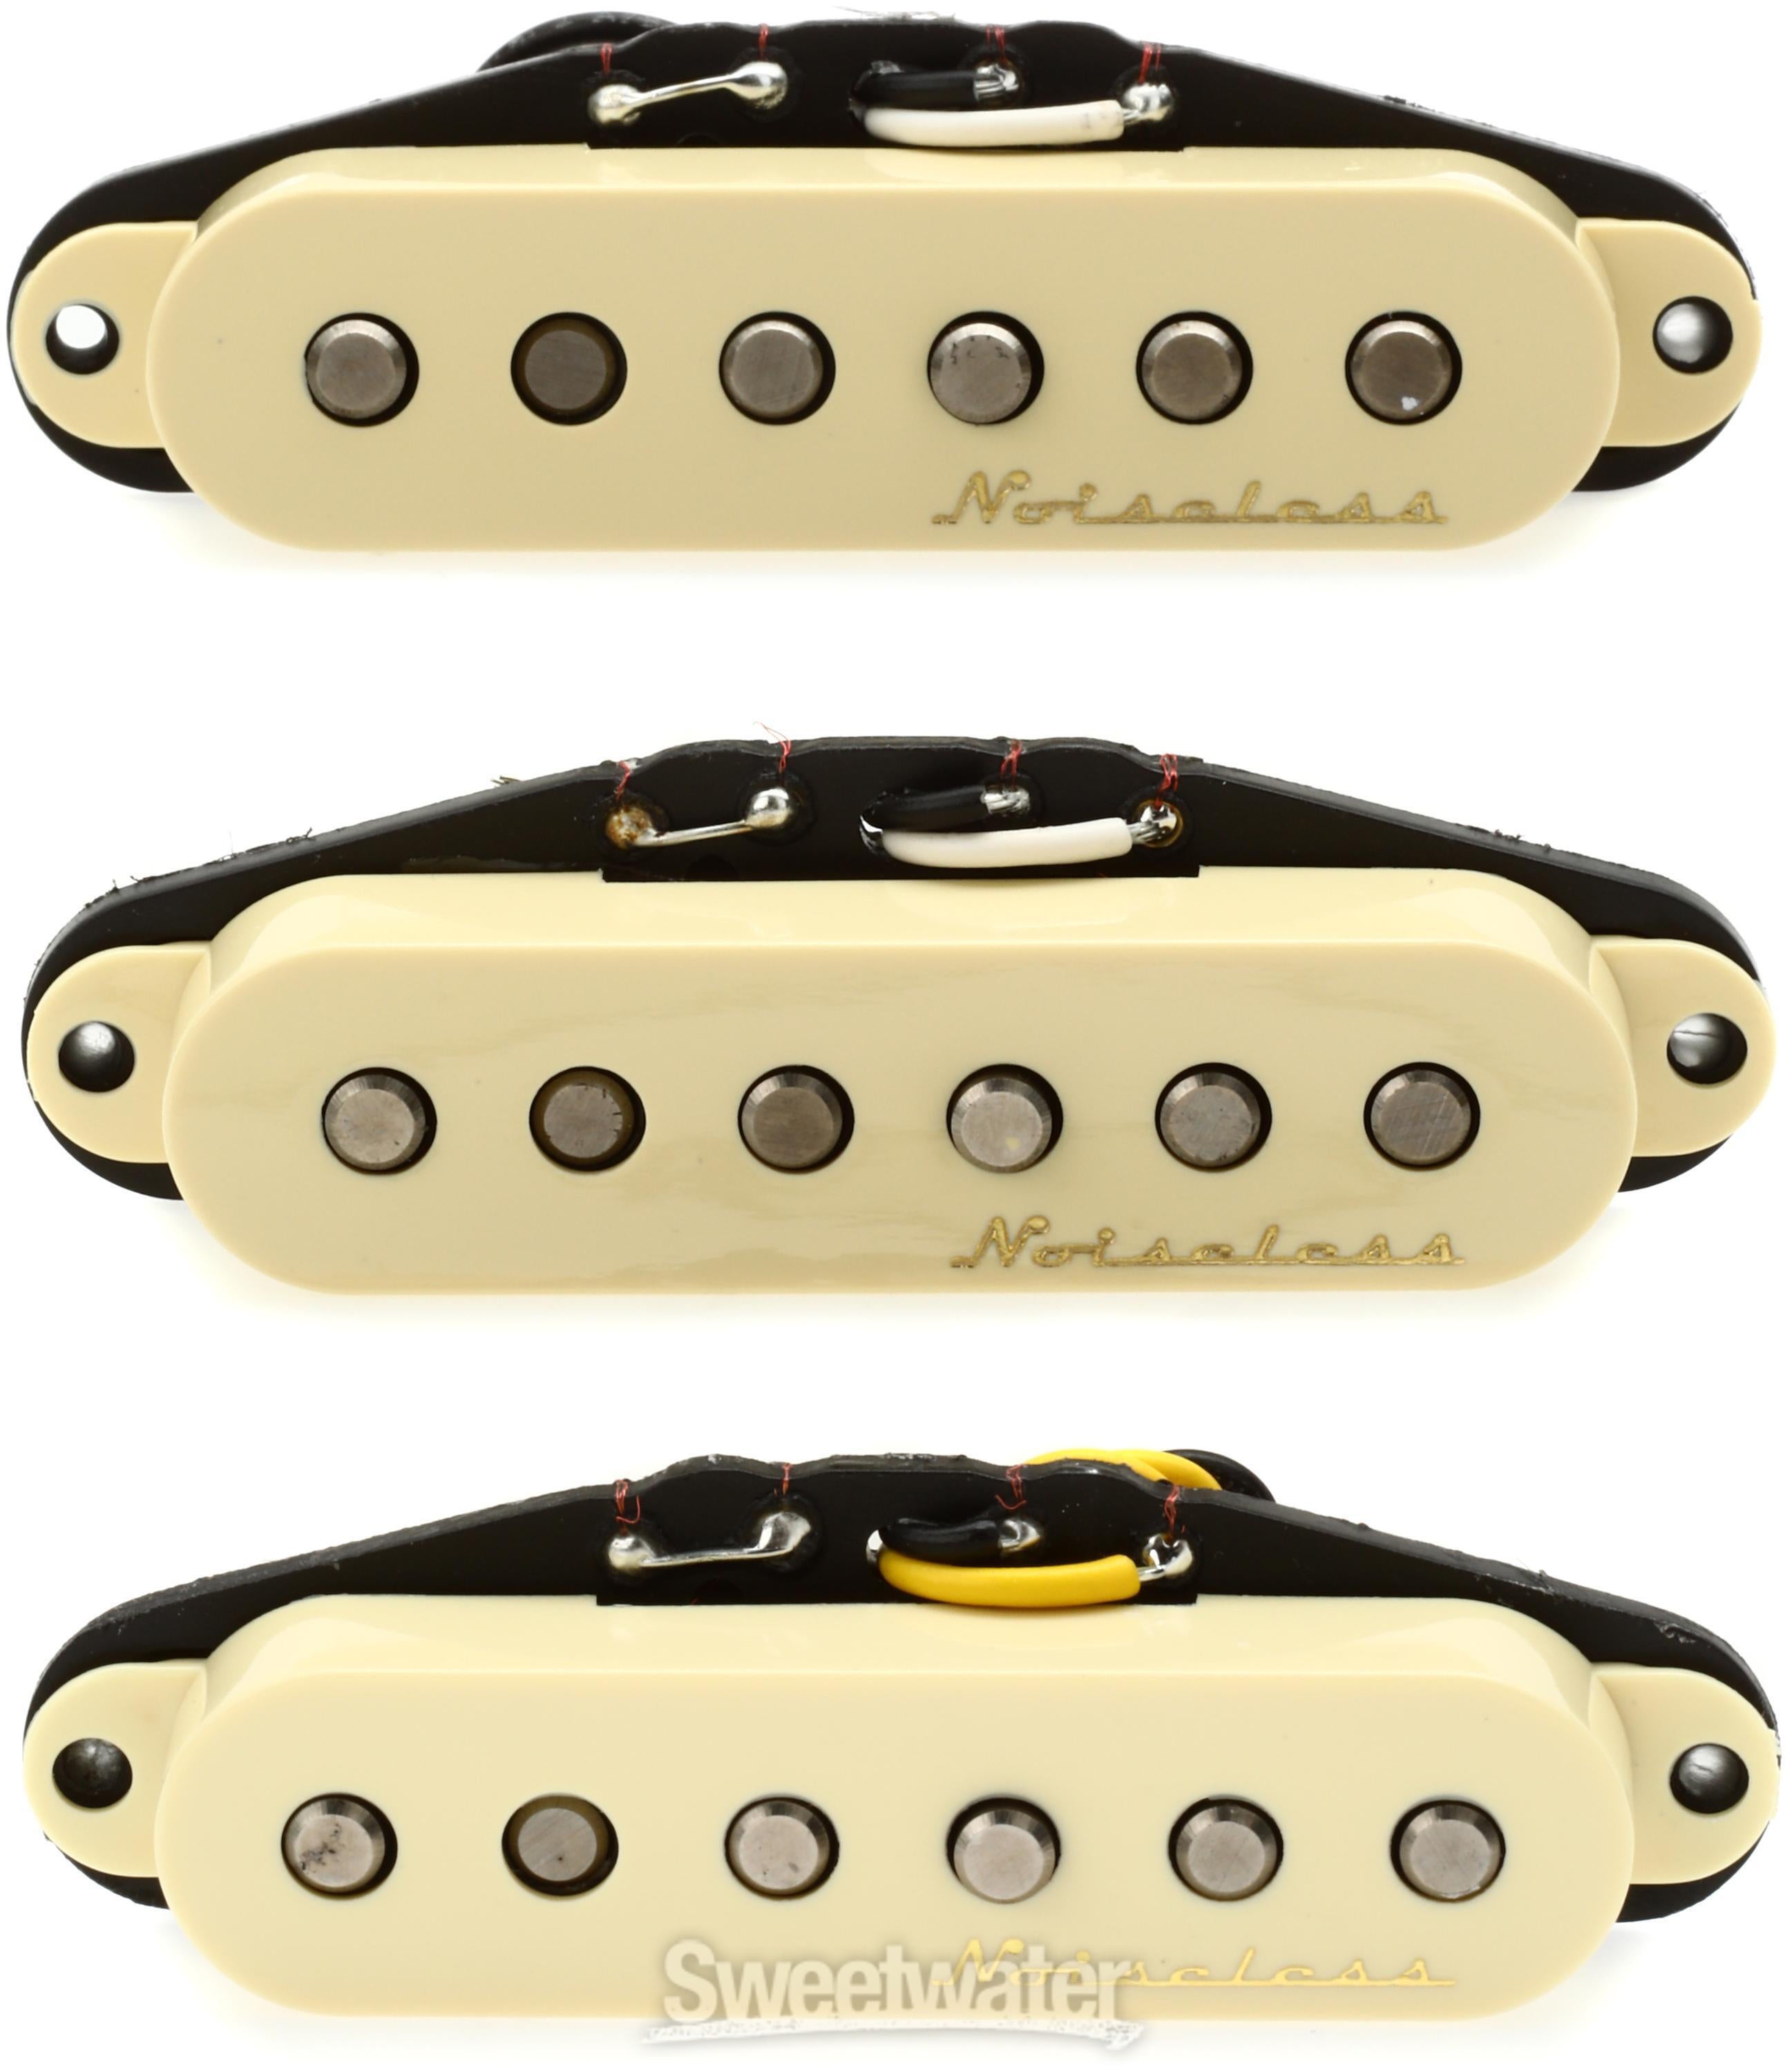 Fender Vintage Noiseless Stratocaster Pickups 3-piece Set | Sweetwater